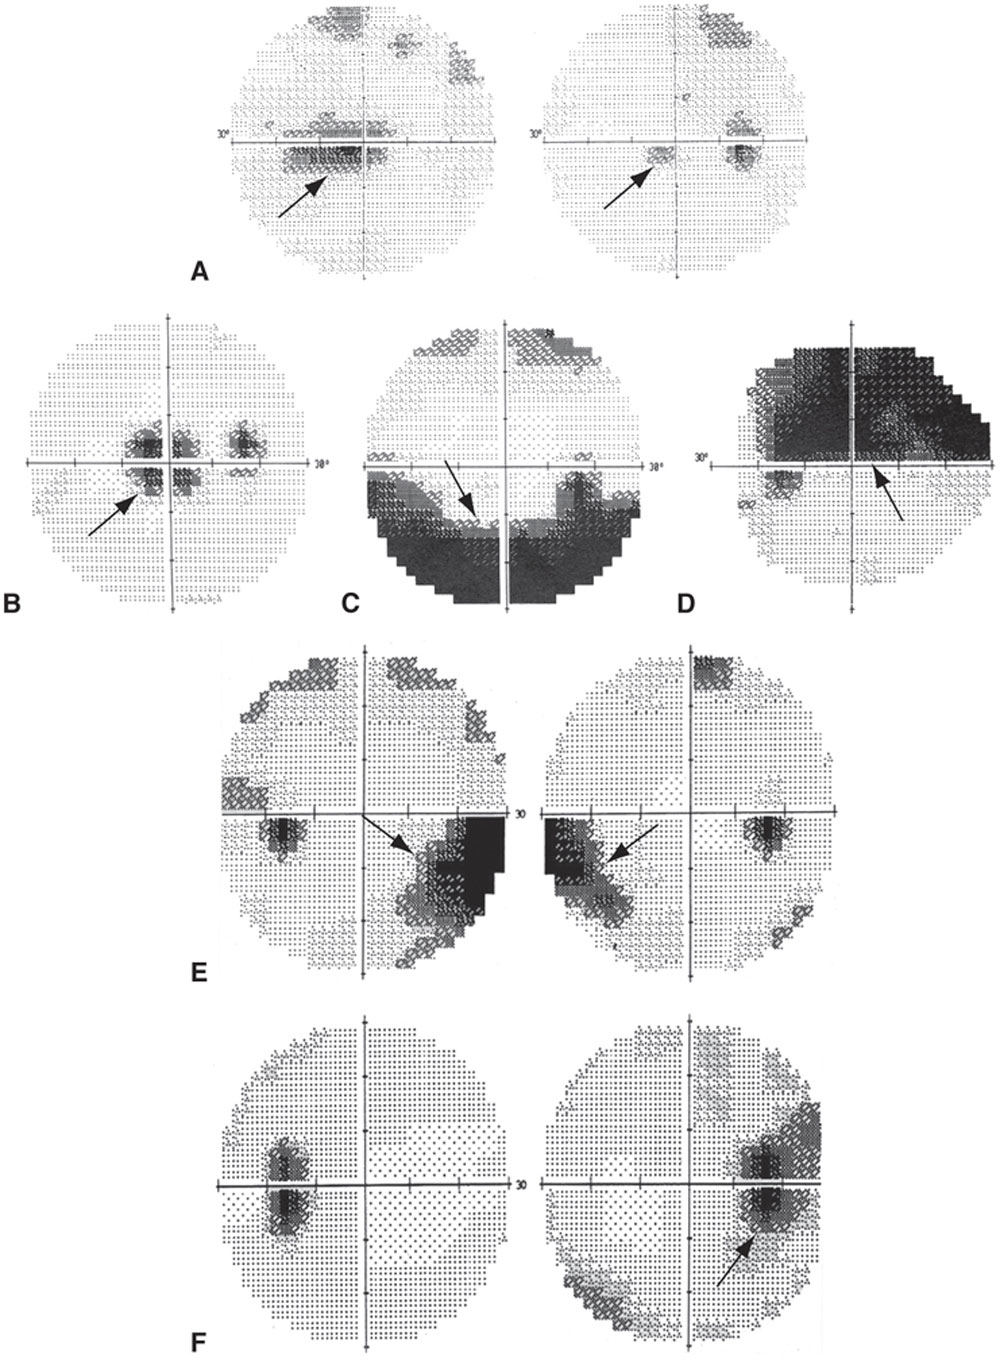 scotoma evolution optic neuritis